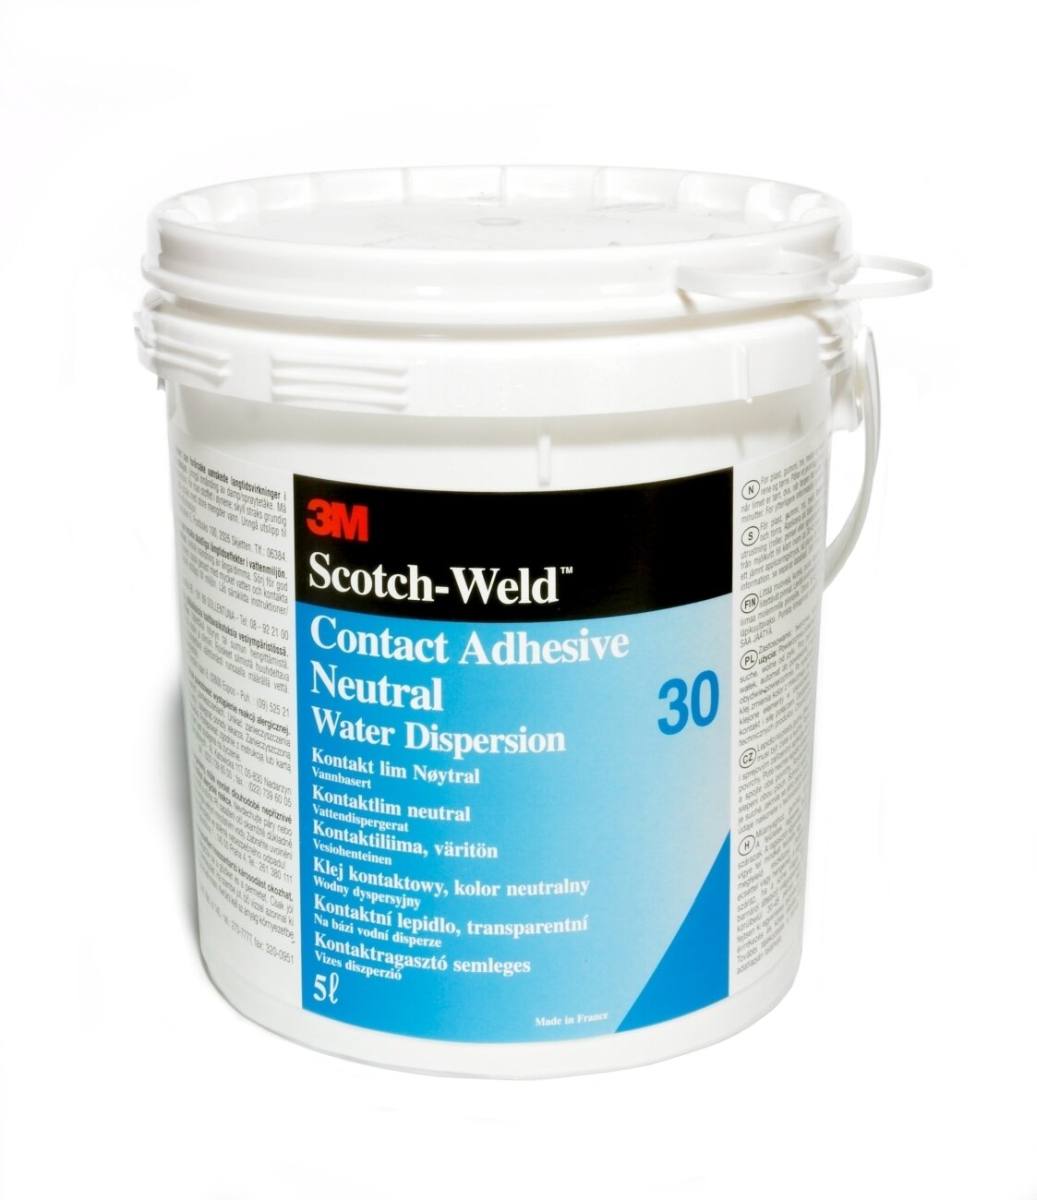 3M Scotch-Weld dispersielijm op basis van polychloropreen 30 NF, transparant, 5 liter